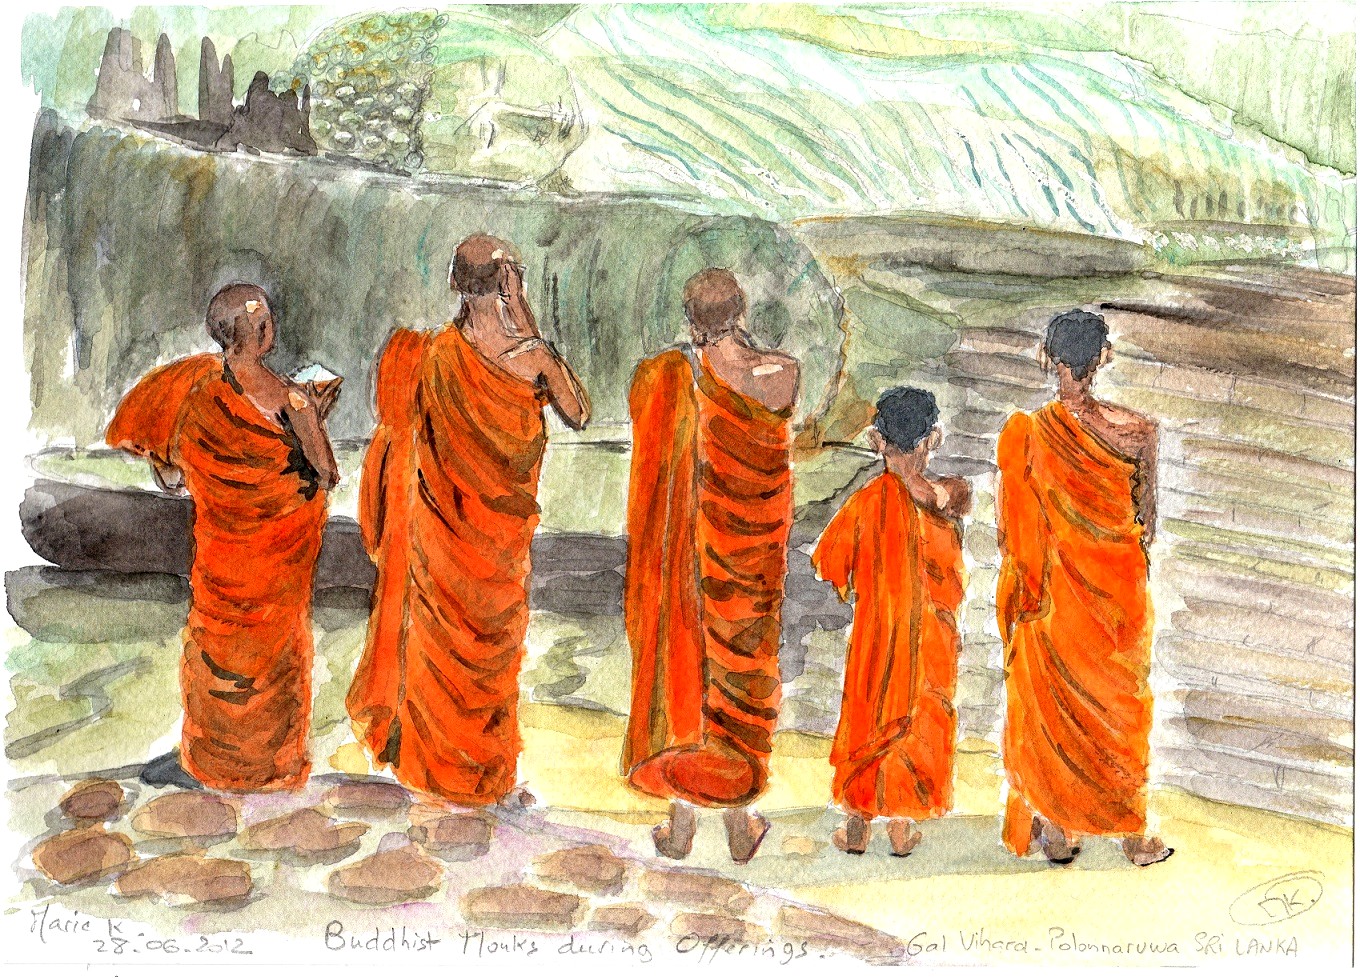 http://3.bp.blogspot.com/-XqCqnTr85rs/T-xqJvizInI/AAAAAAAAMME/qYN4k5hNJrM/s1600/Buddhist+Monks+205x297+(3).jpg